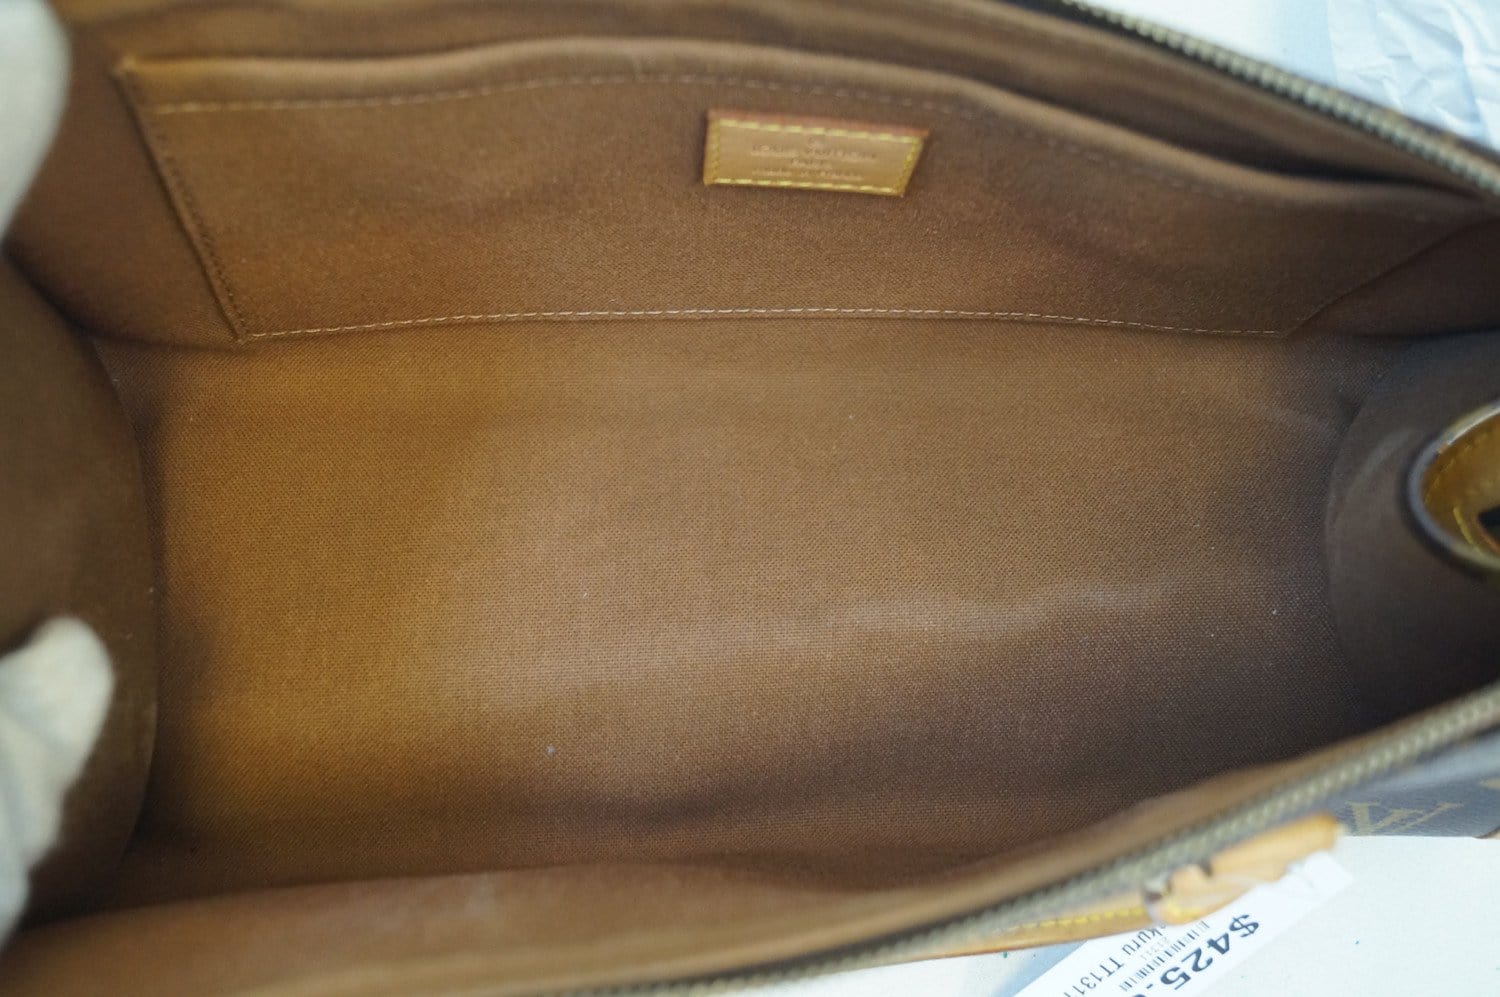 Popincourt PM NM Monogram – Keeks Designer Handbags